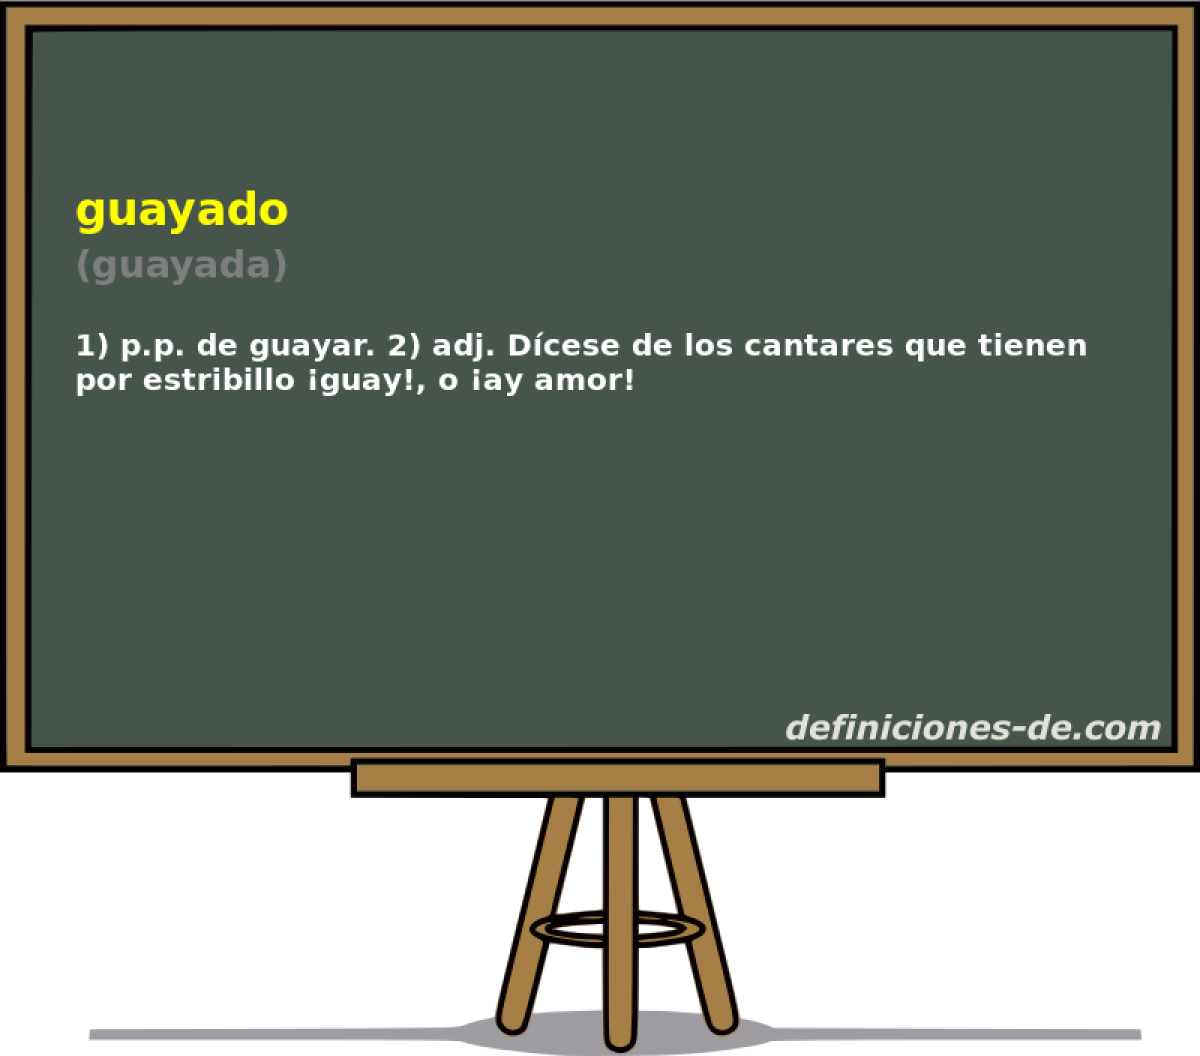 guayado (guayada)